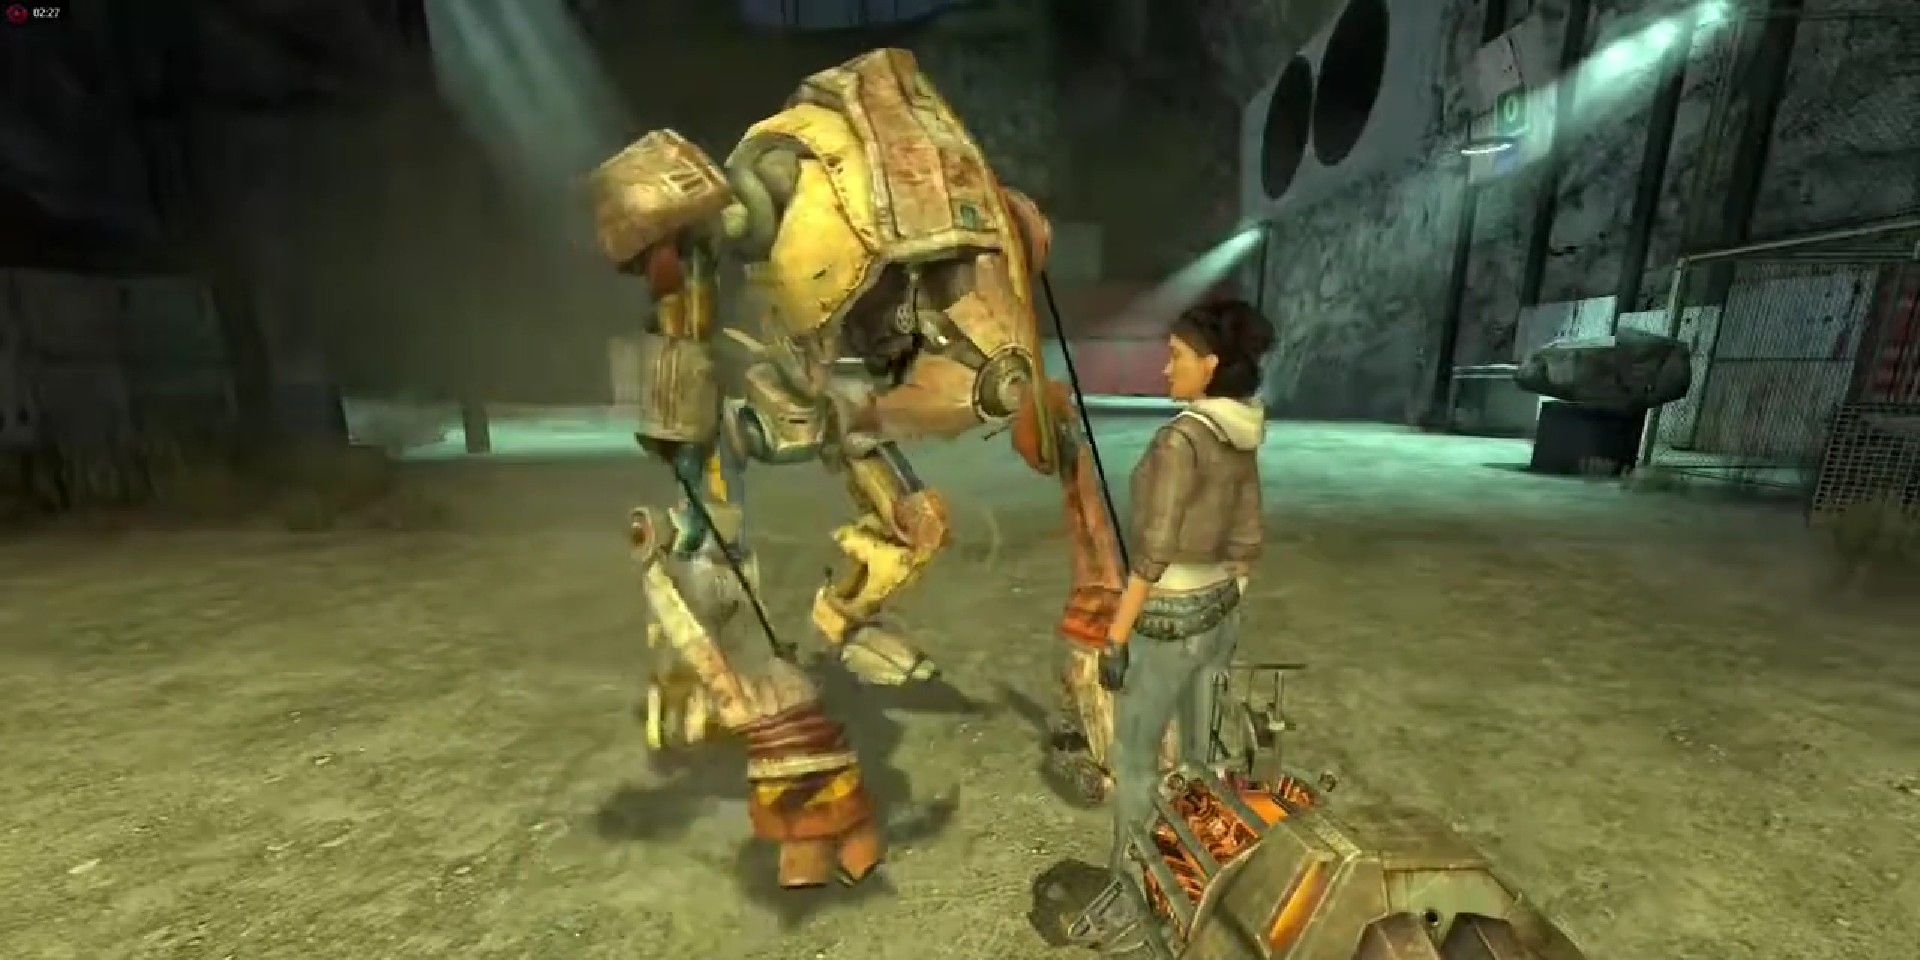 Half Life 2 screenshot of Dog and Alyx Vance.